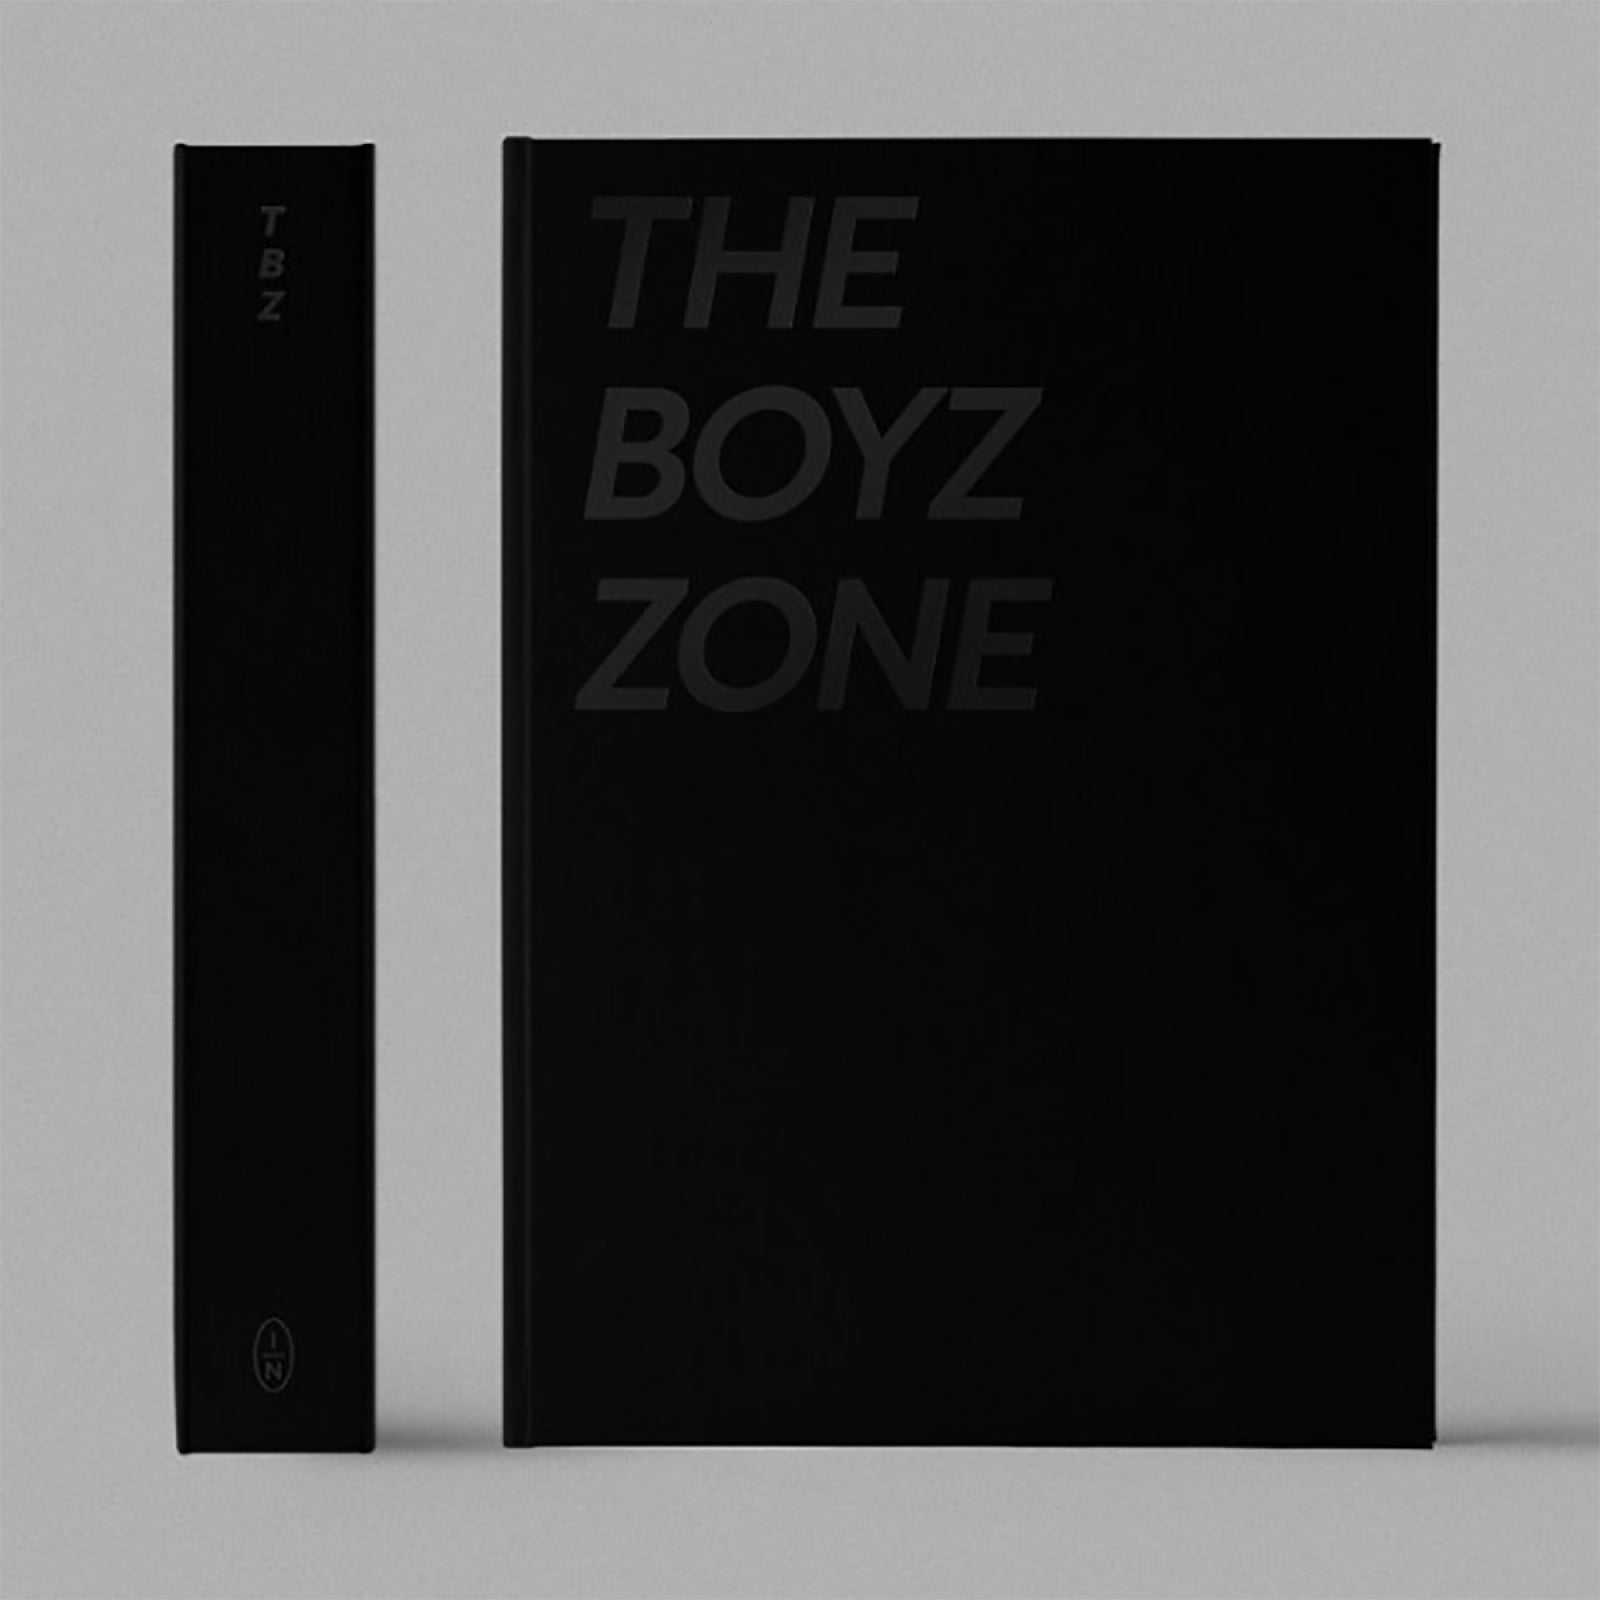 THE BOYZ - [The Boyz Zone] Tour Photobook